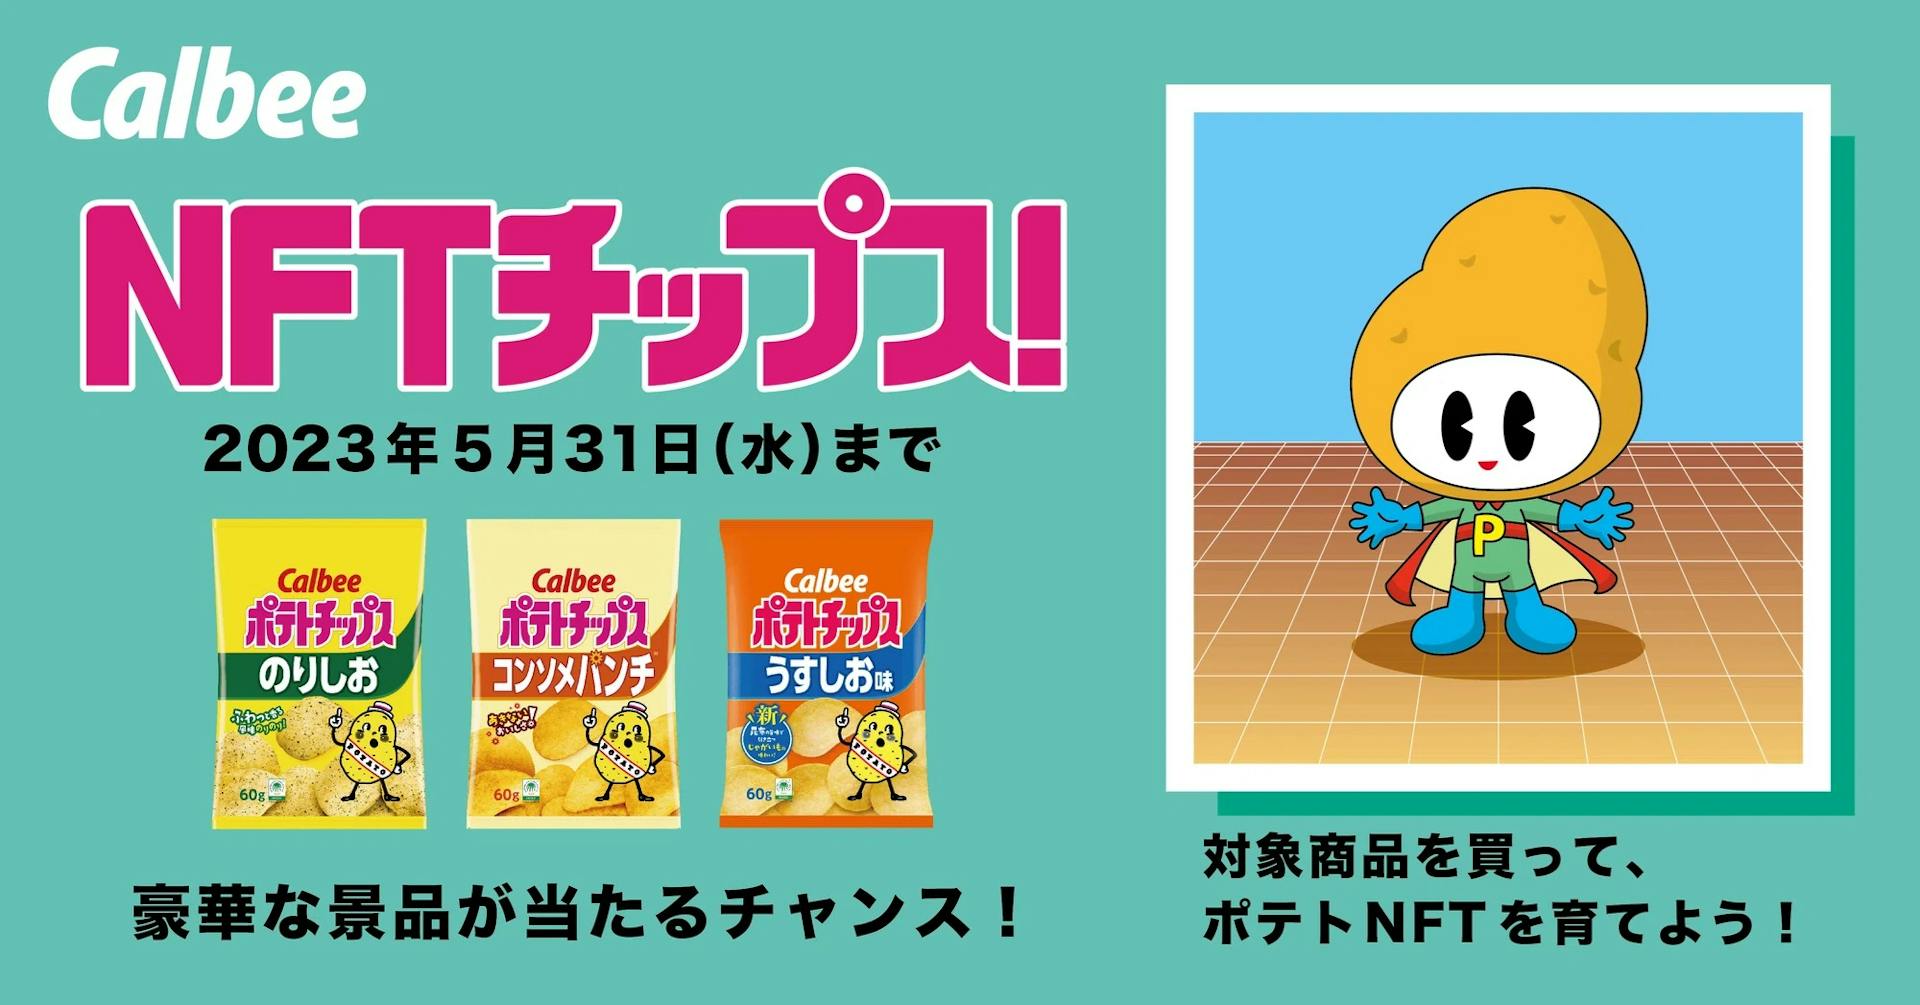 calbee - japanese web3 loyalty program for consumer snacks